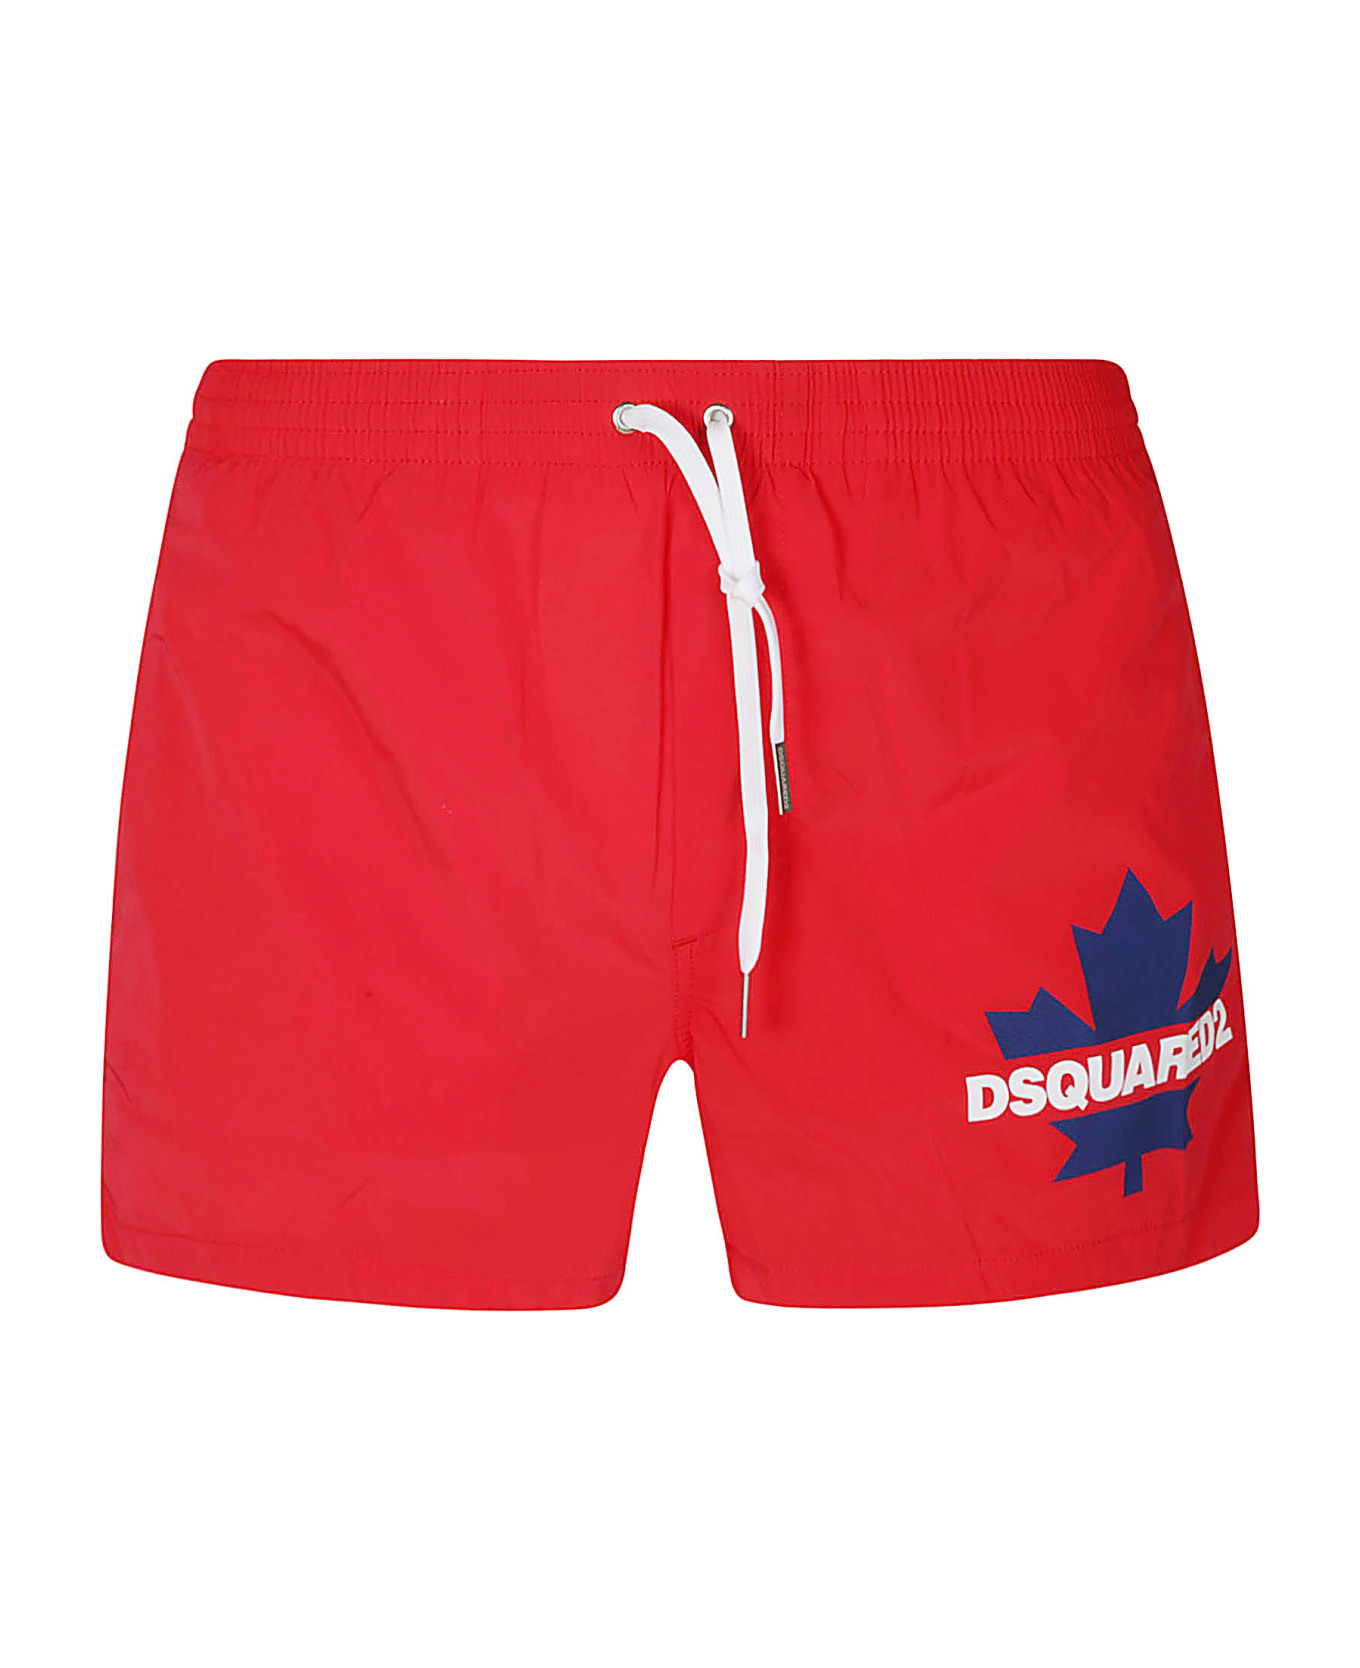 Dsquared2 Leaf Logo Print Swim Shorts - Red